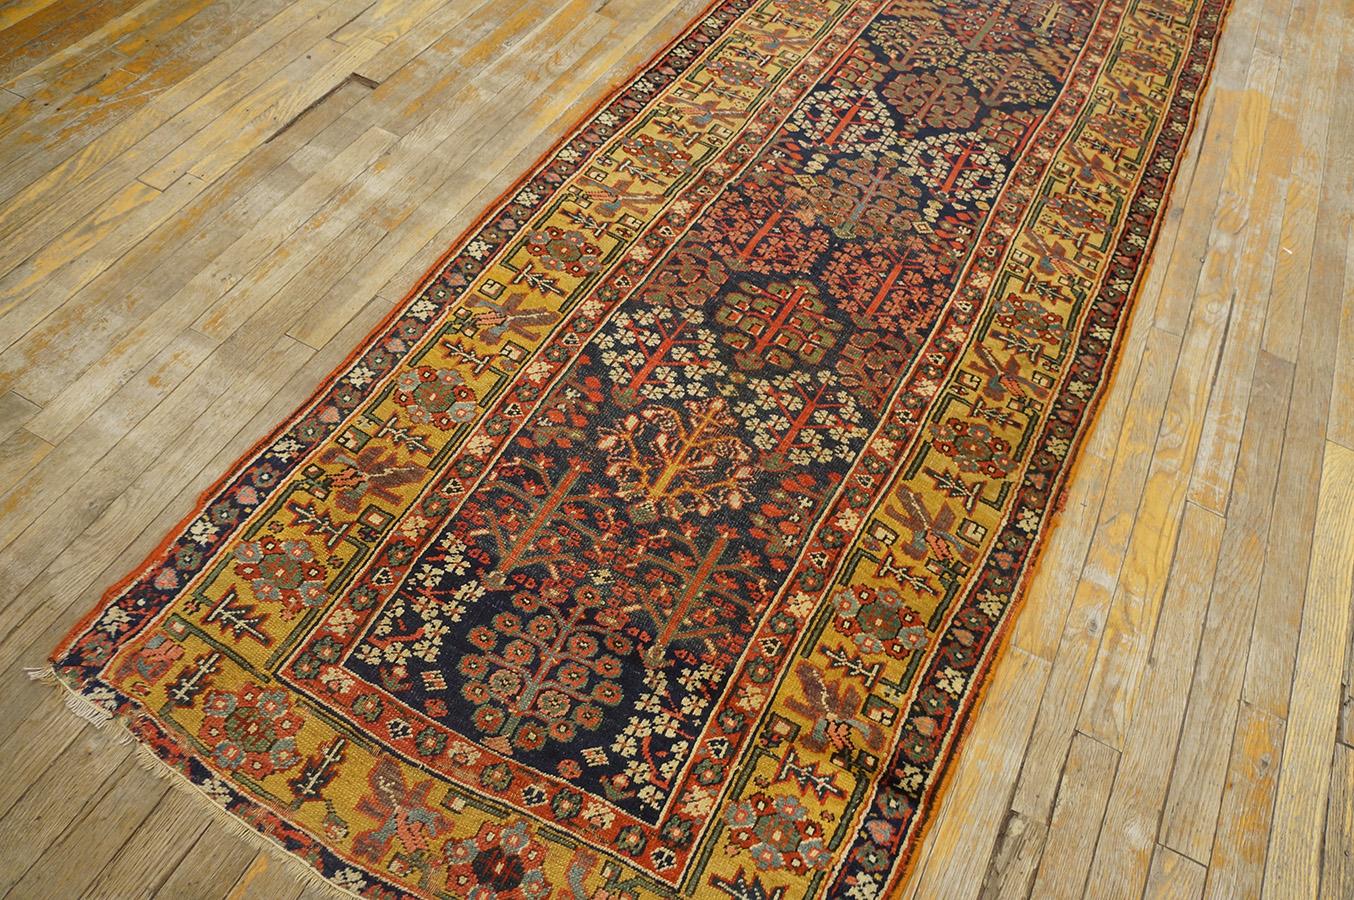 Mid 19th Century W. Persian Kurdish Shrub Runner Carpet (3' x 14'6'' - 90 x 443) For Sale 6